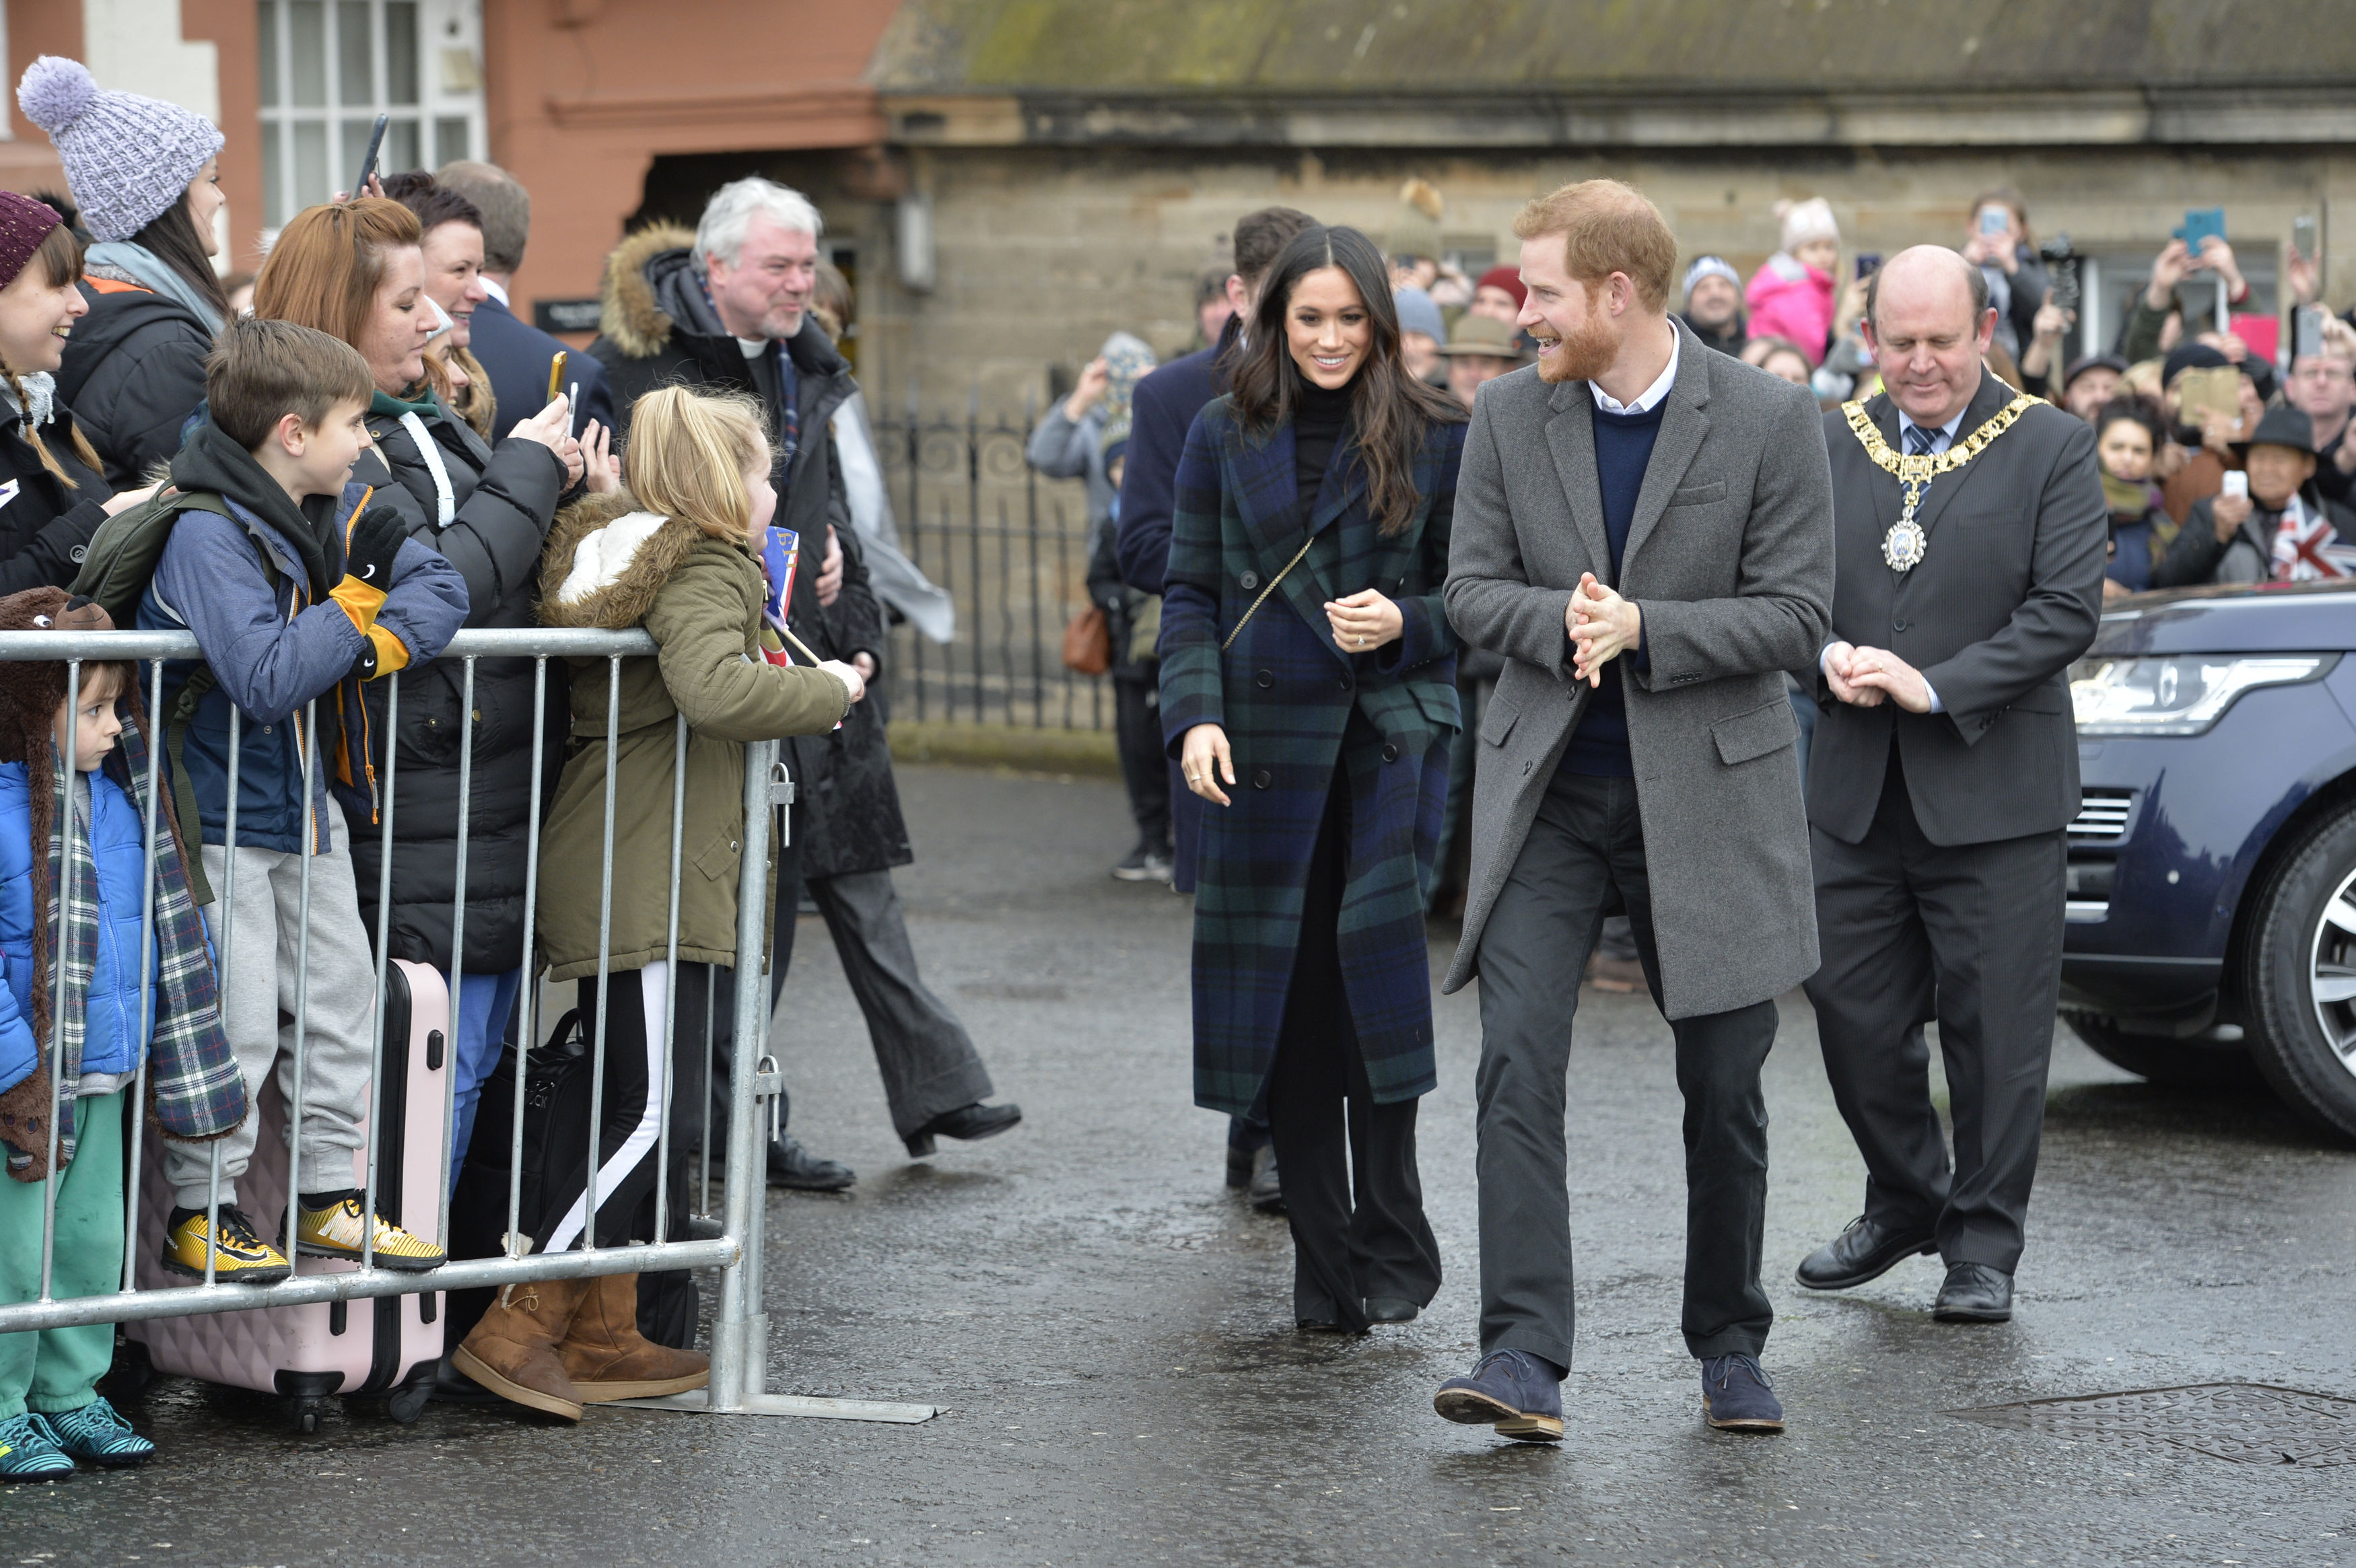 The soon-to-be royal couple arriving at Edinburgh Castle (John Linton/PA)